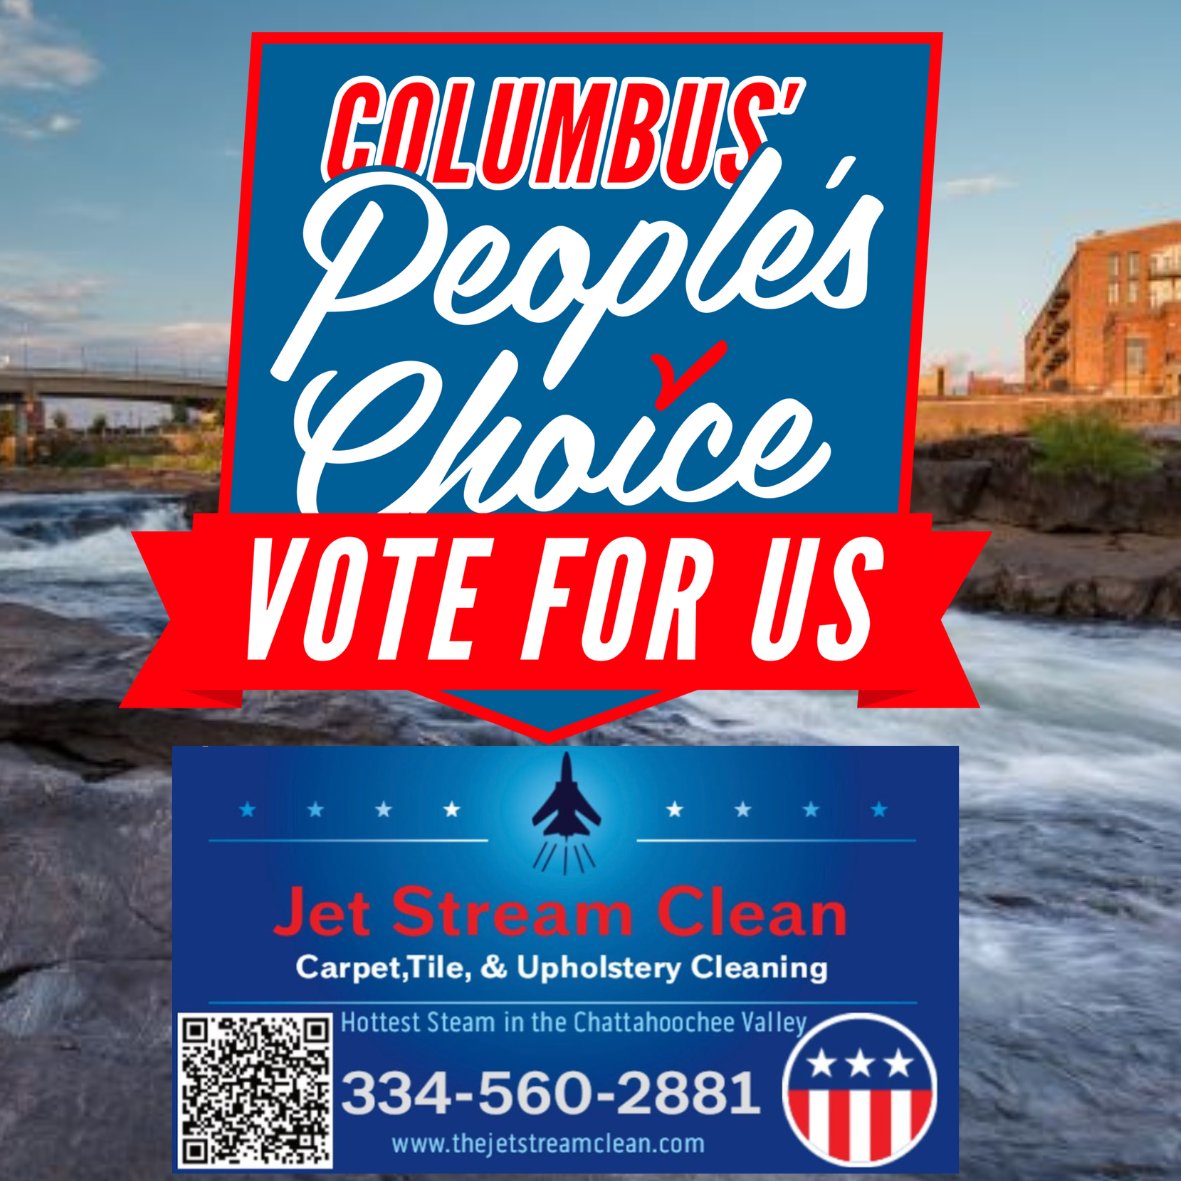 Vote for Jet Stream Clean votecpc.com